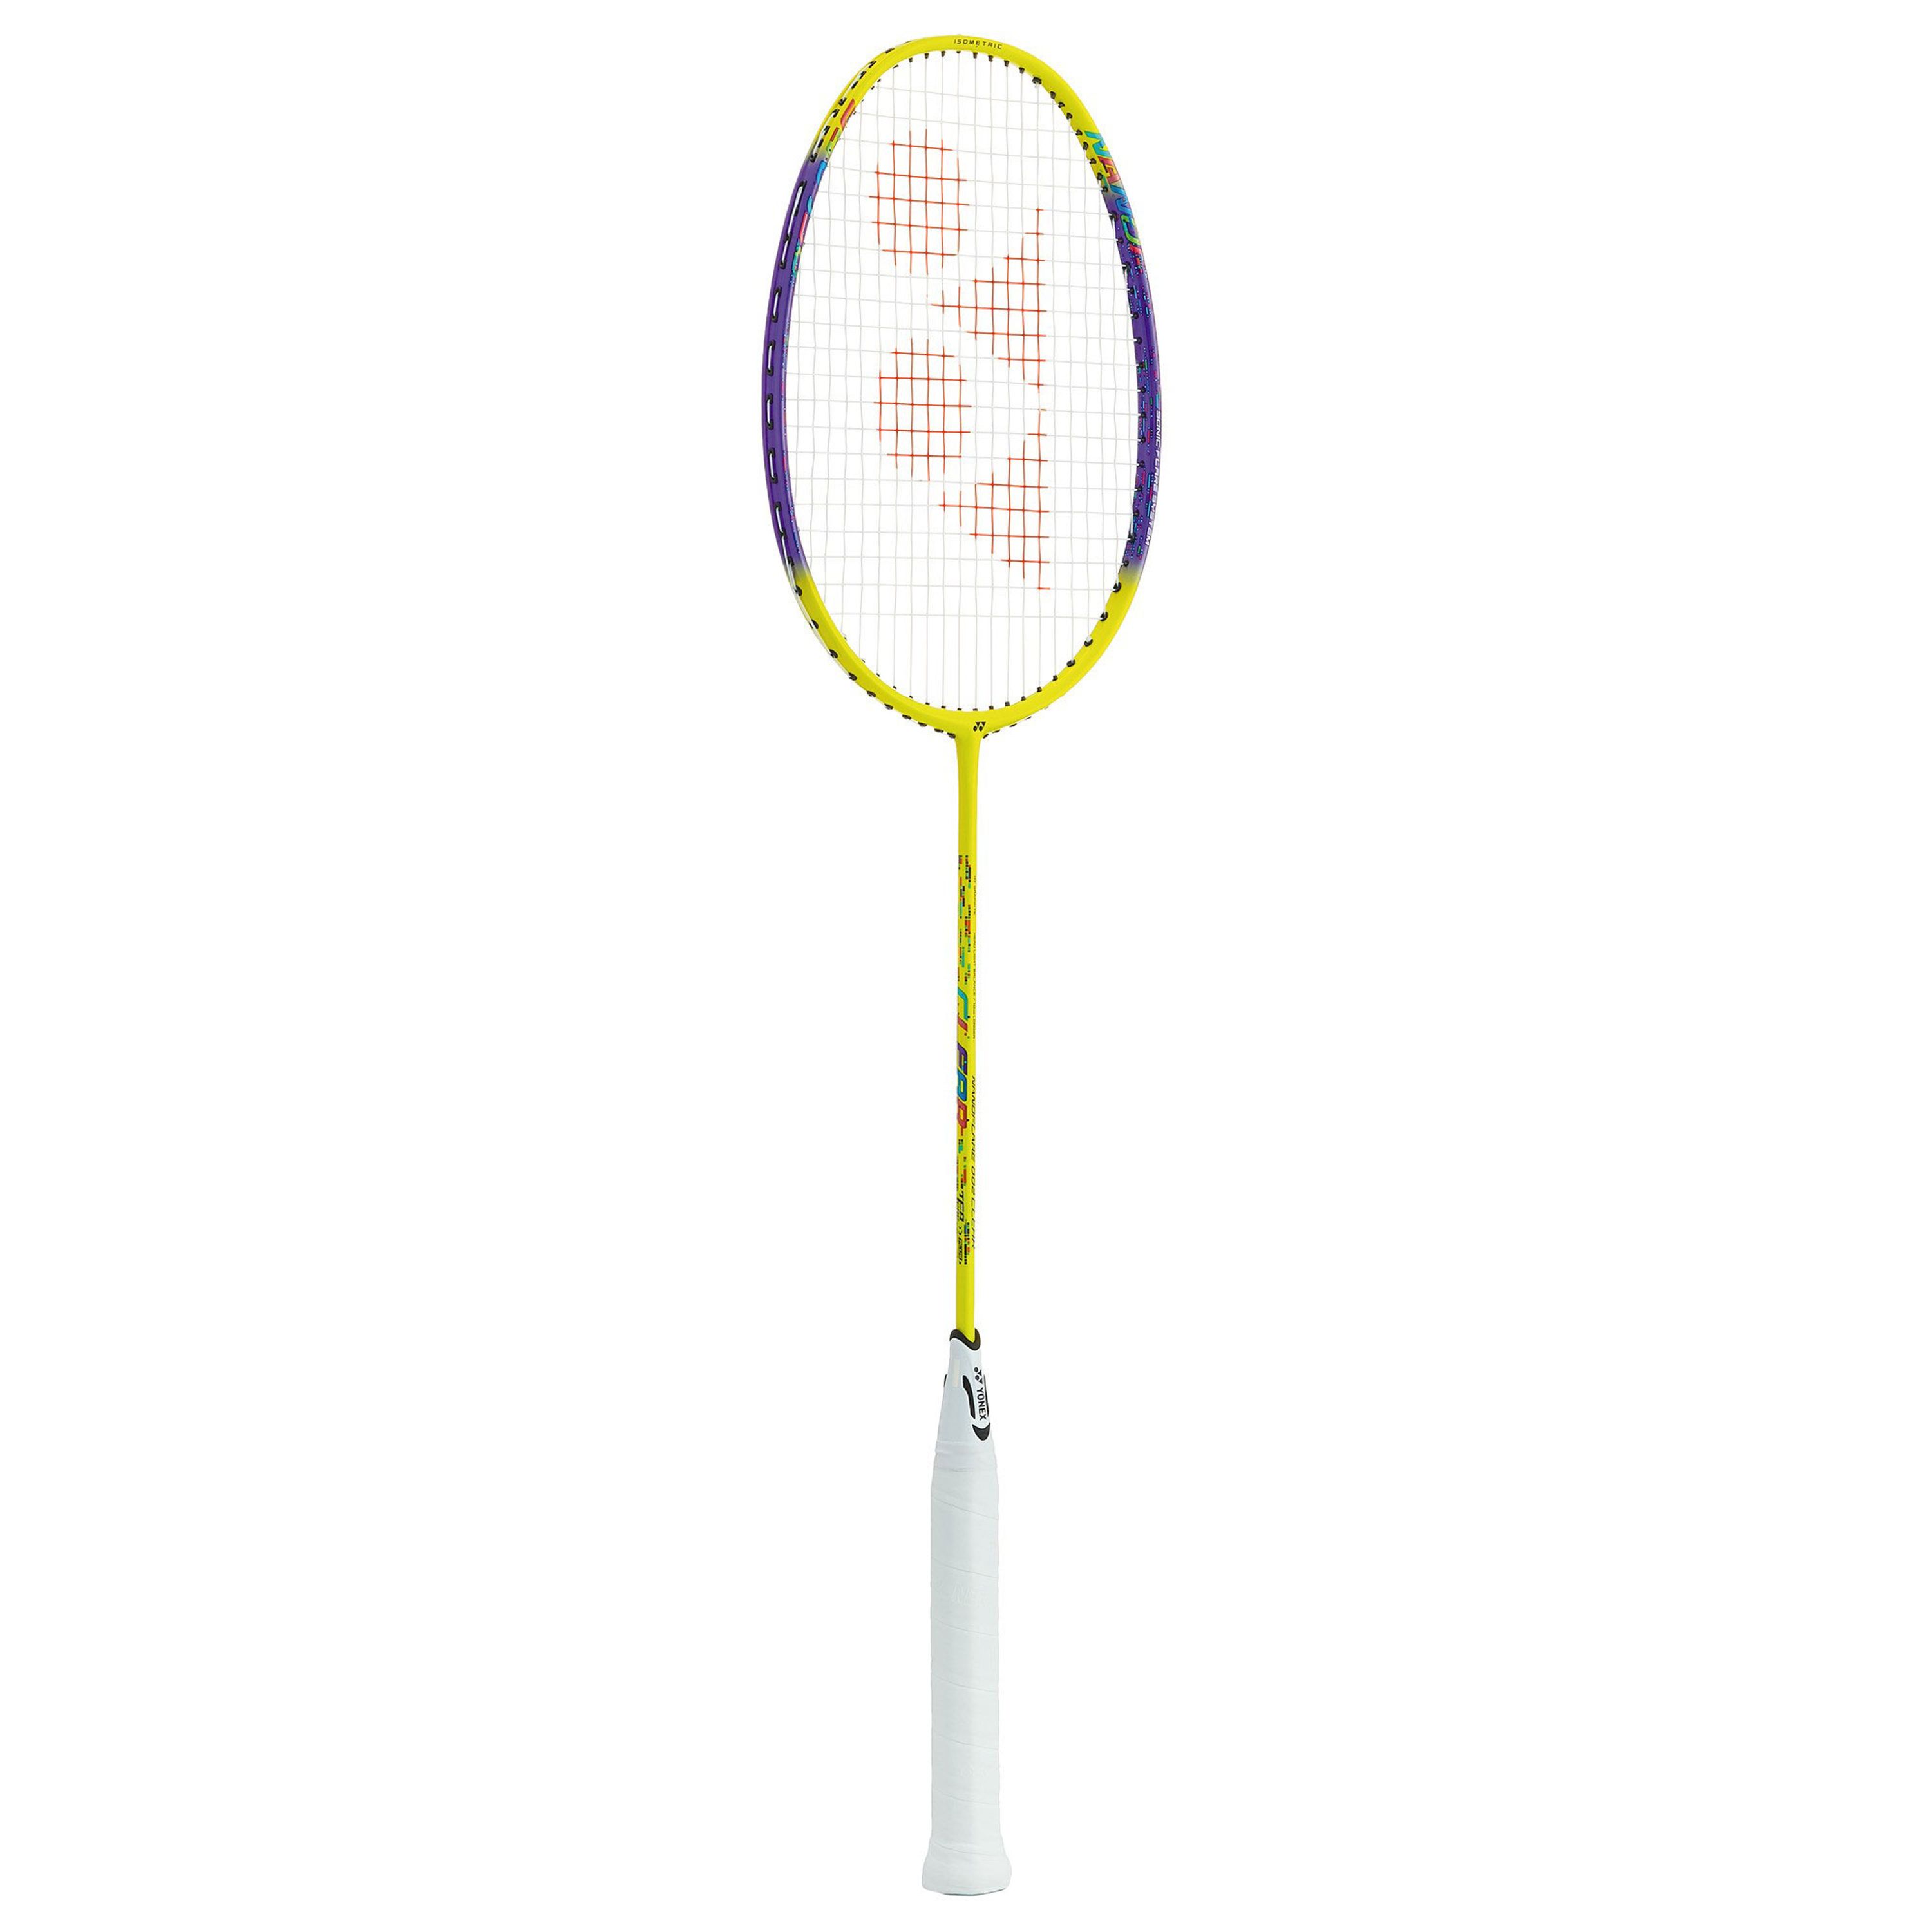 Yonex Nanoflare 002 Clear Badmintonracket